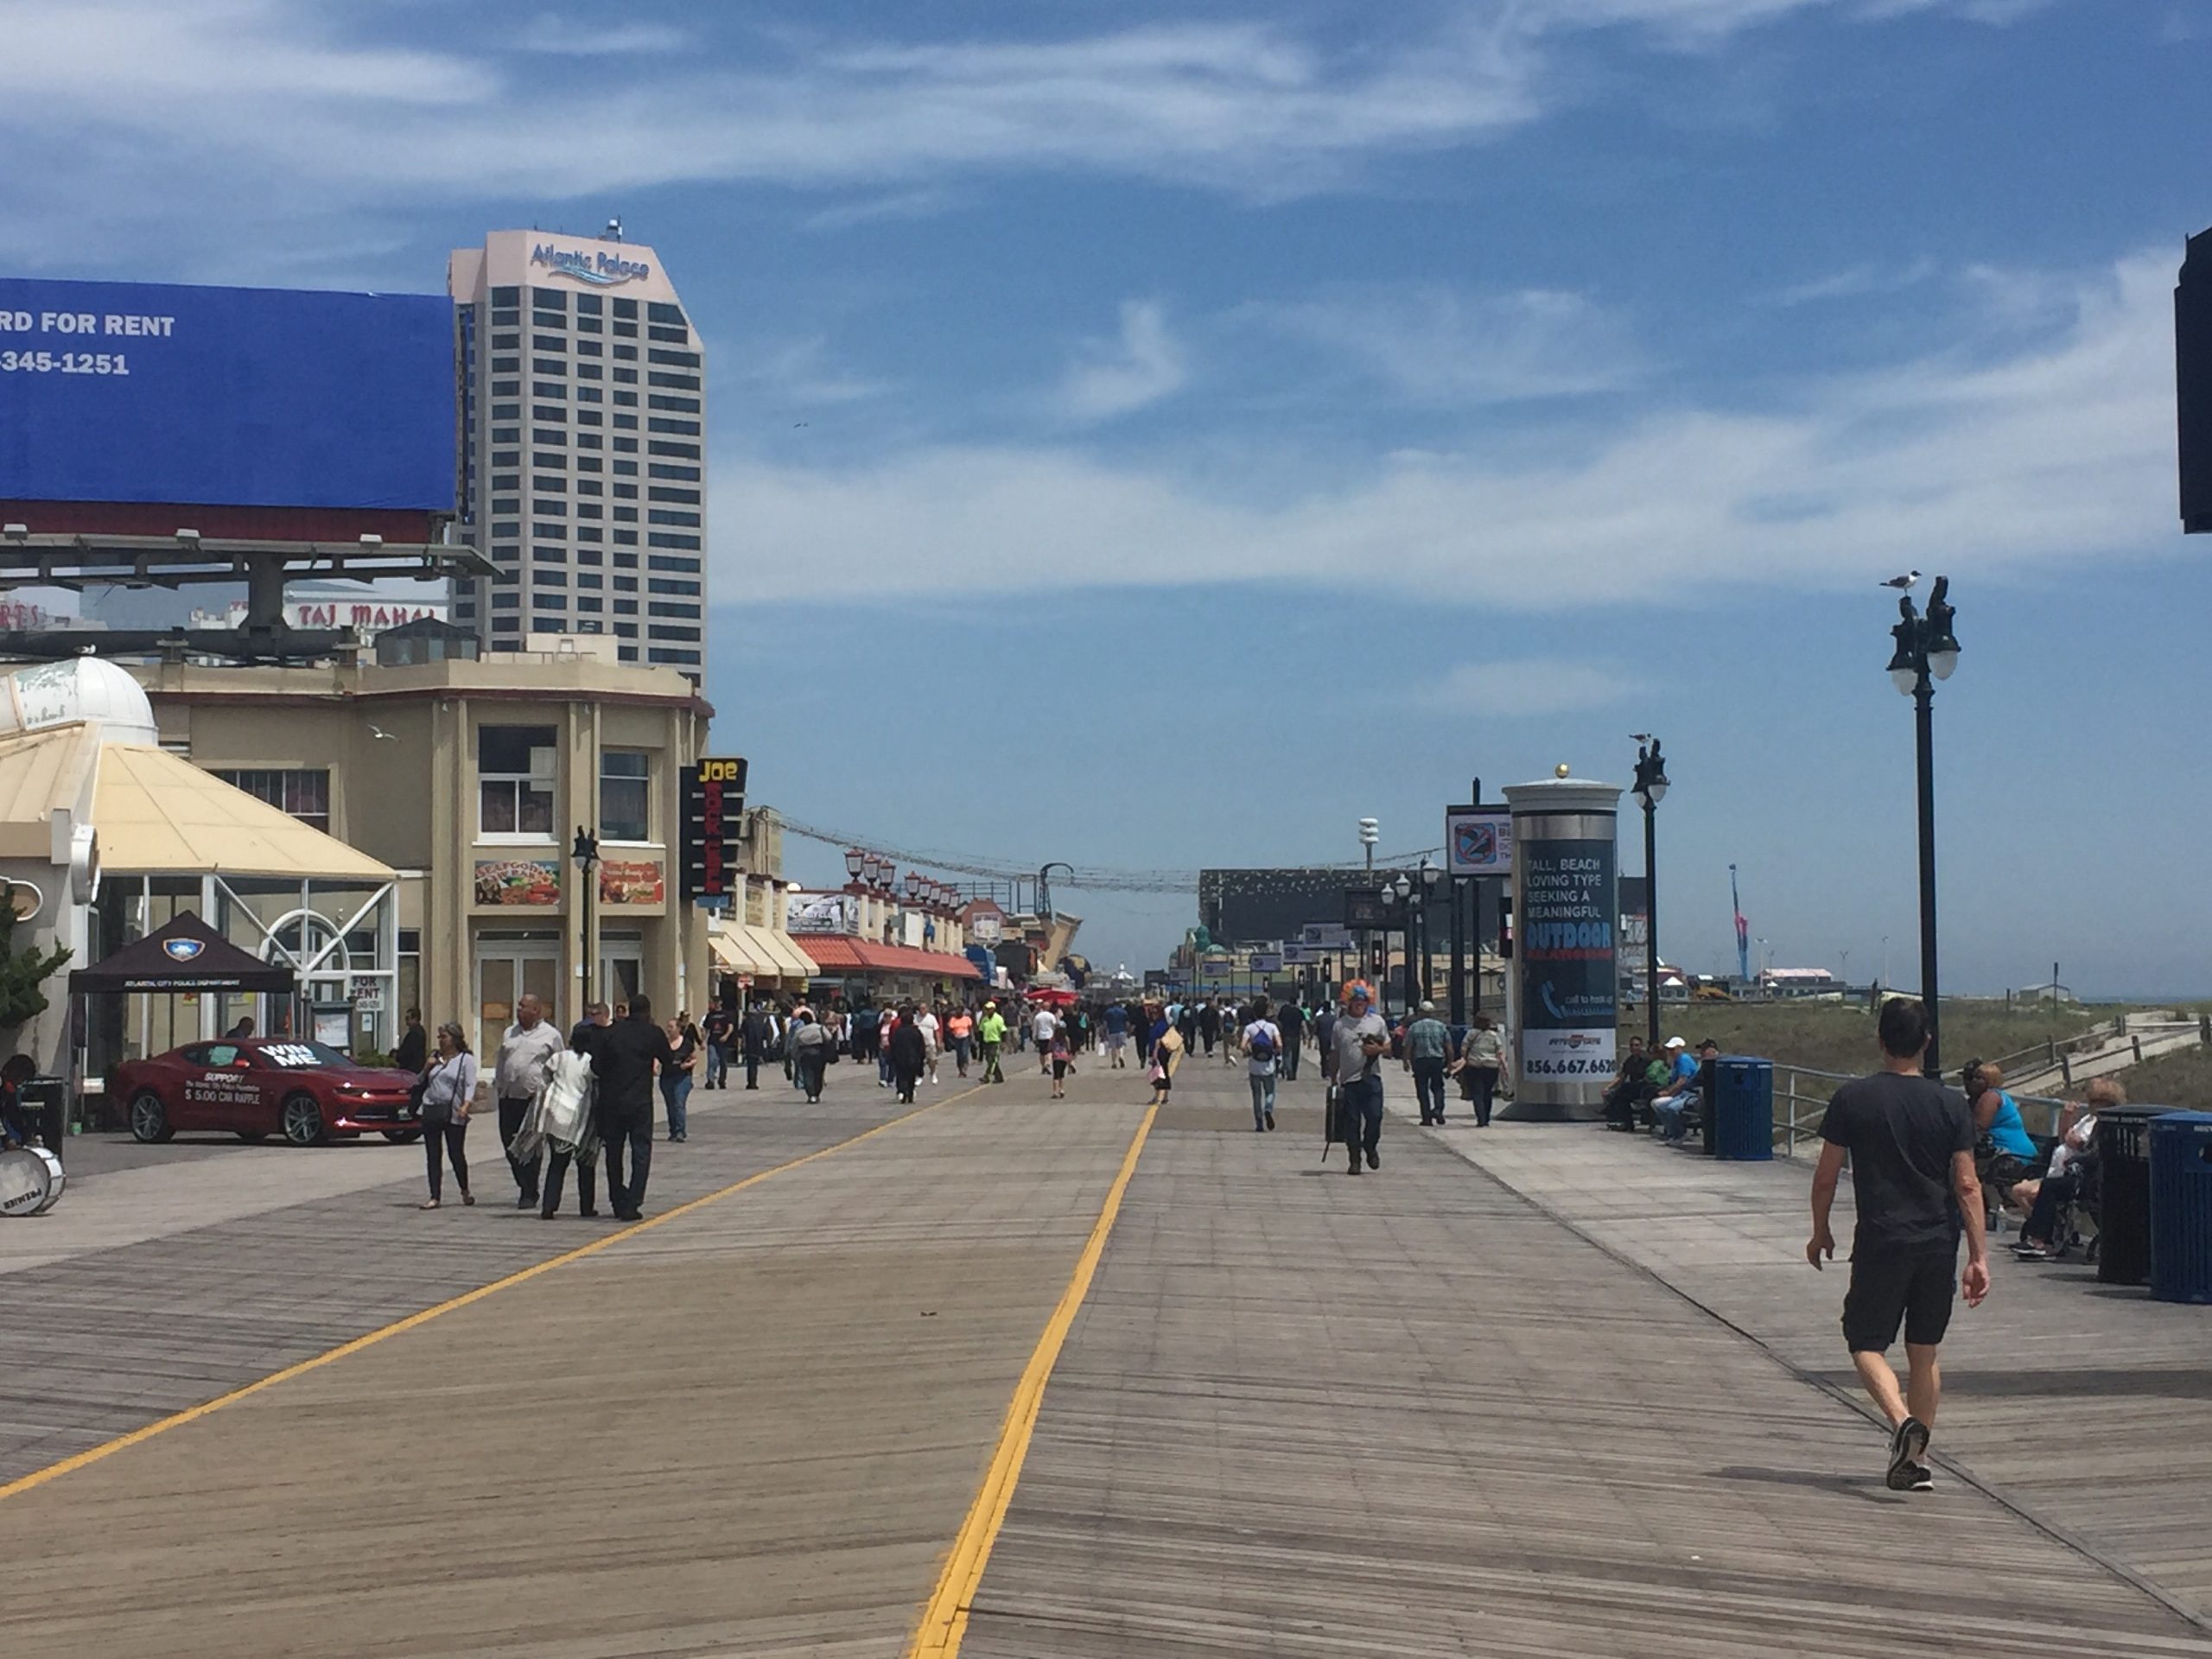 Atlantic City casinos and boardwalk. (Photo: Daniel Nee)